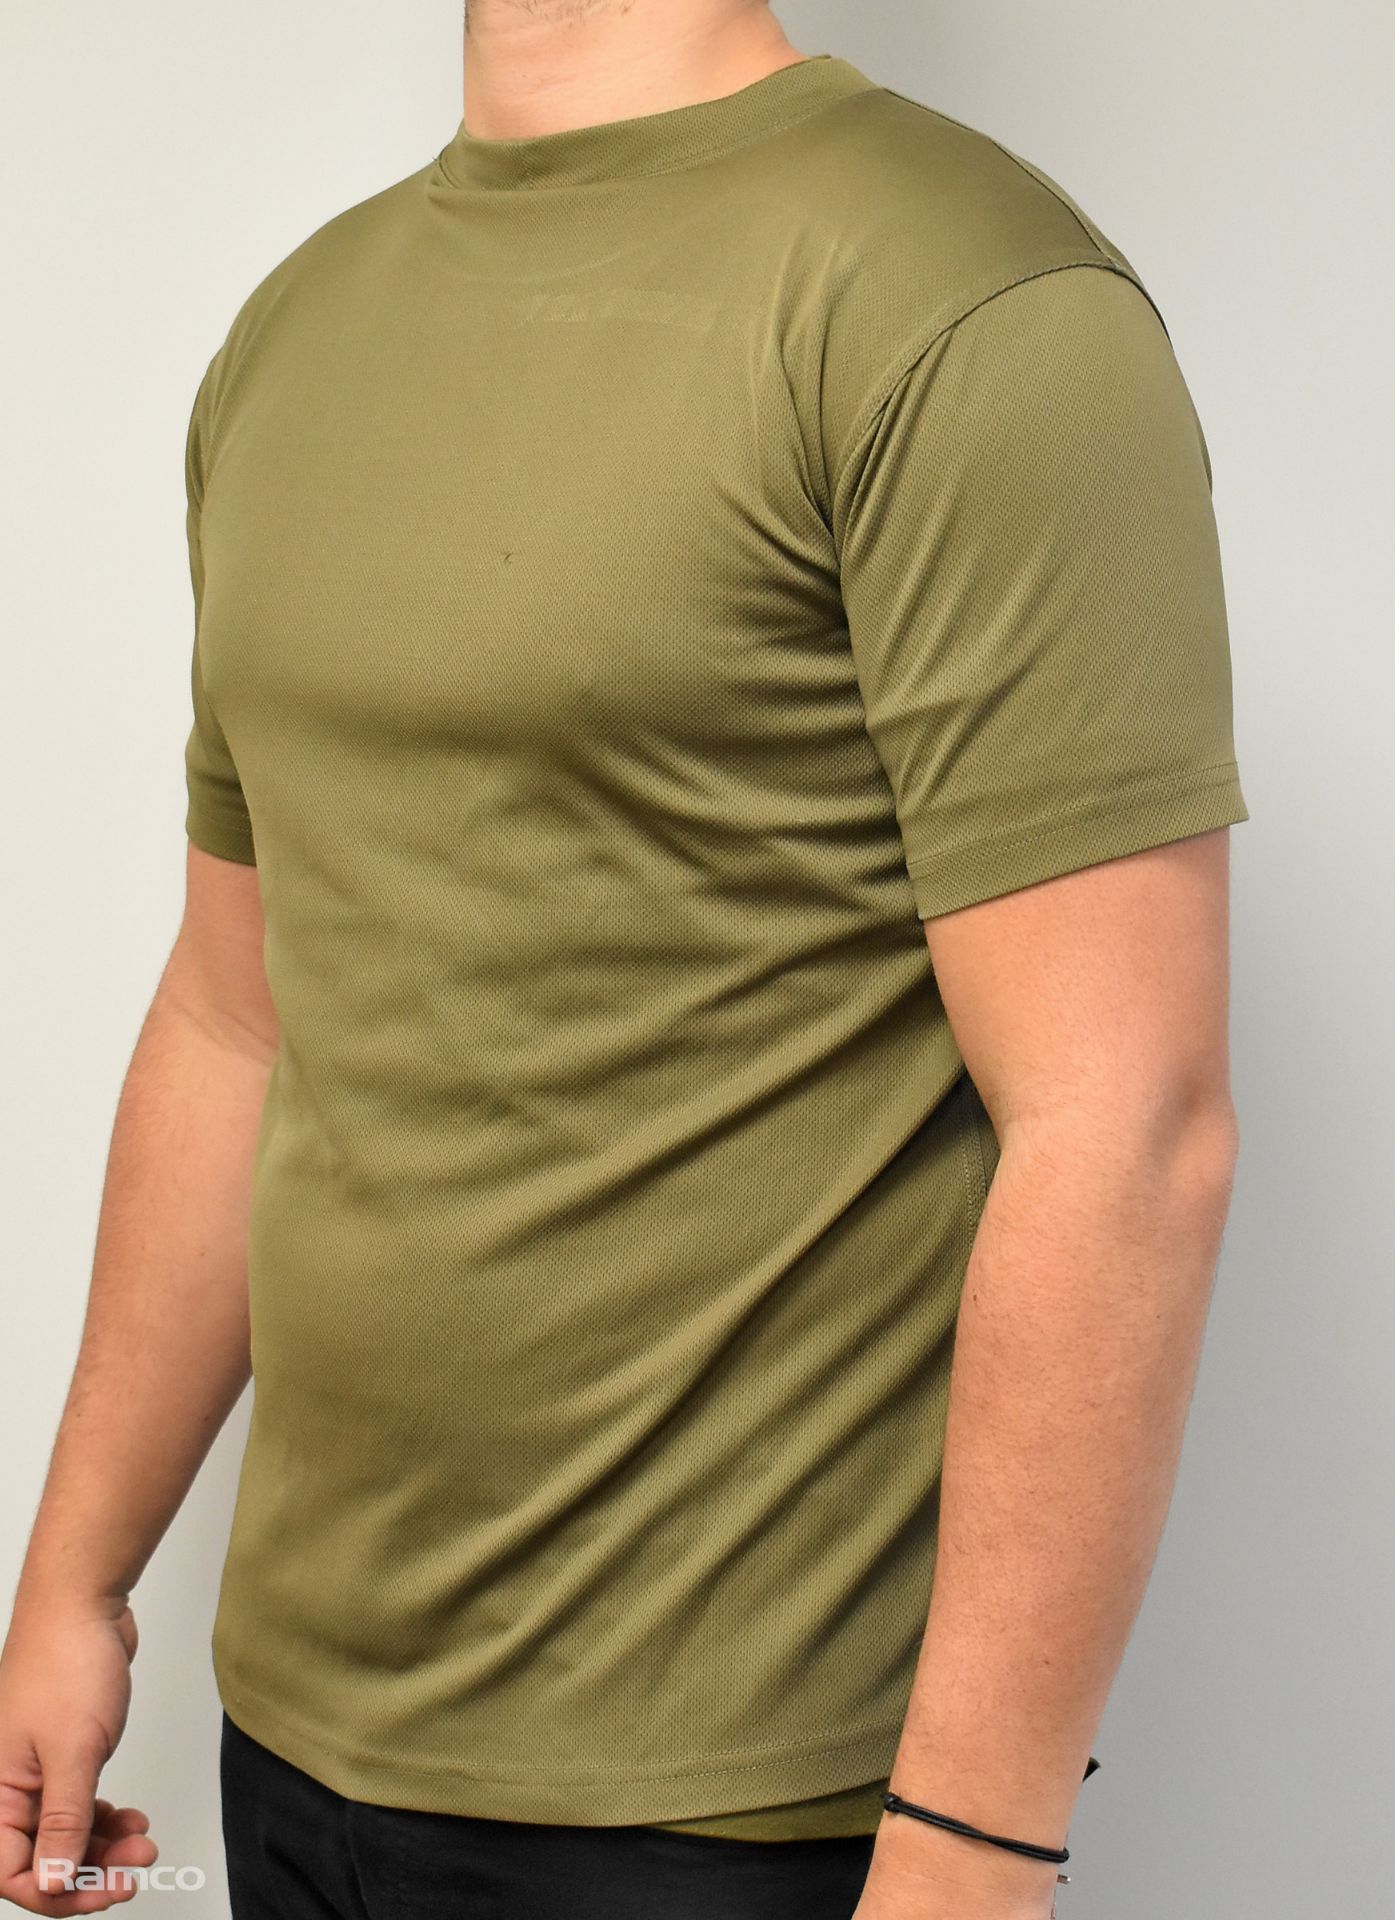 130x British Army combat T-shirts anti static - mixed grades and sizes - Image 2 of 12